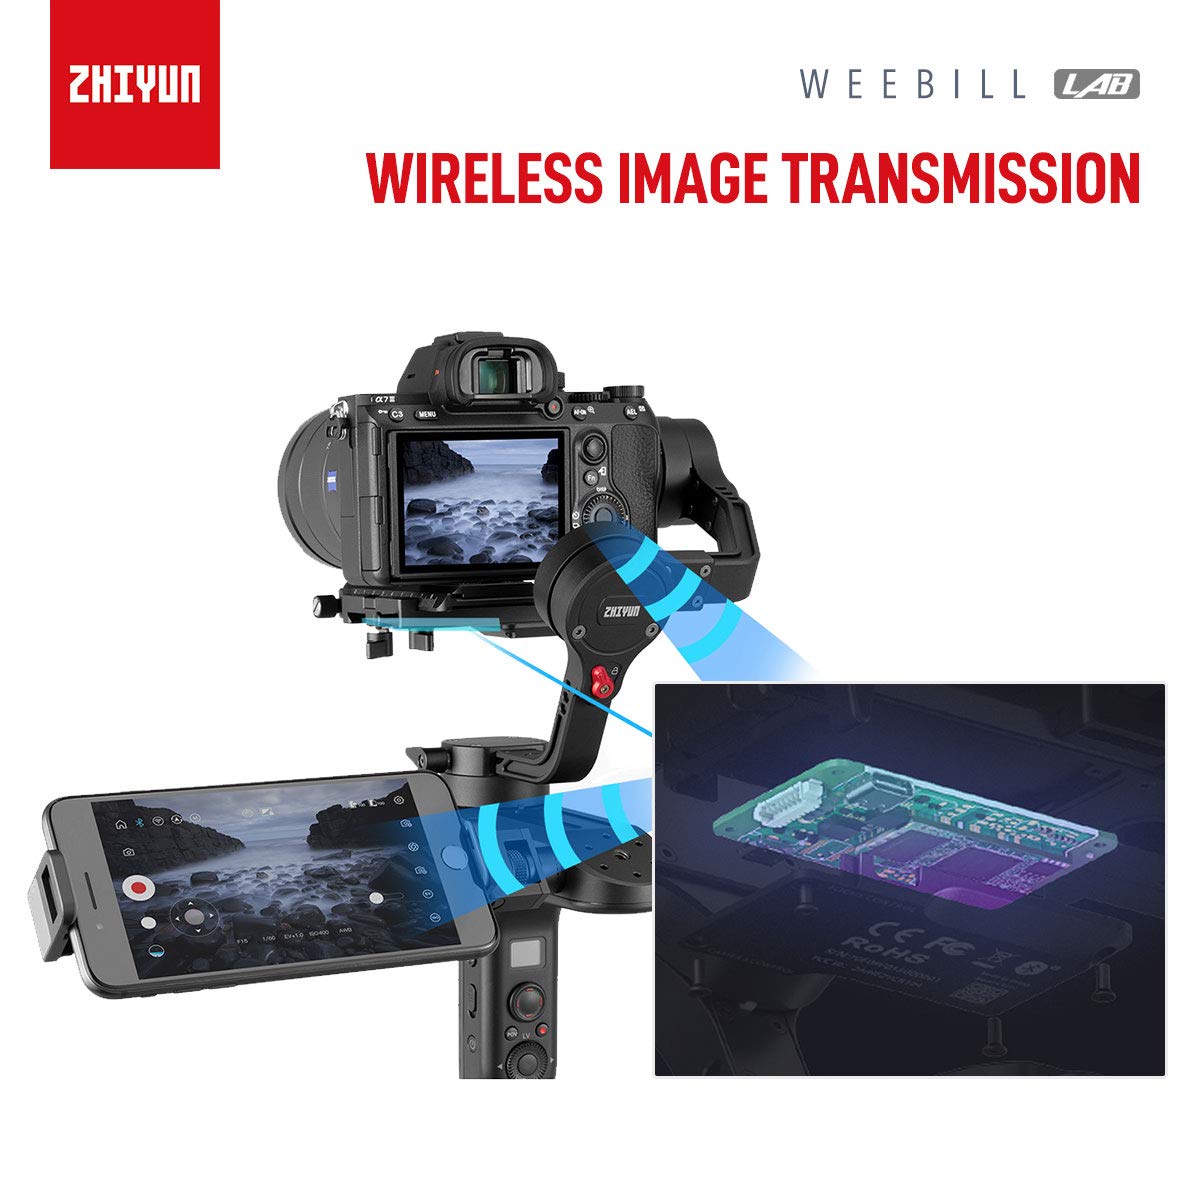 Zhiyun-Tech WEEBILL LAB Master Package